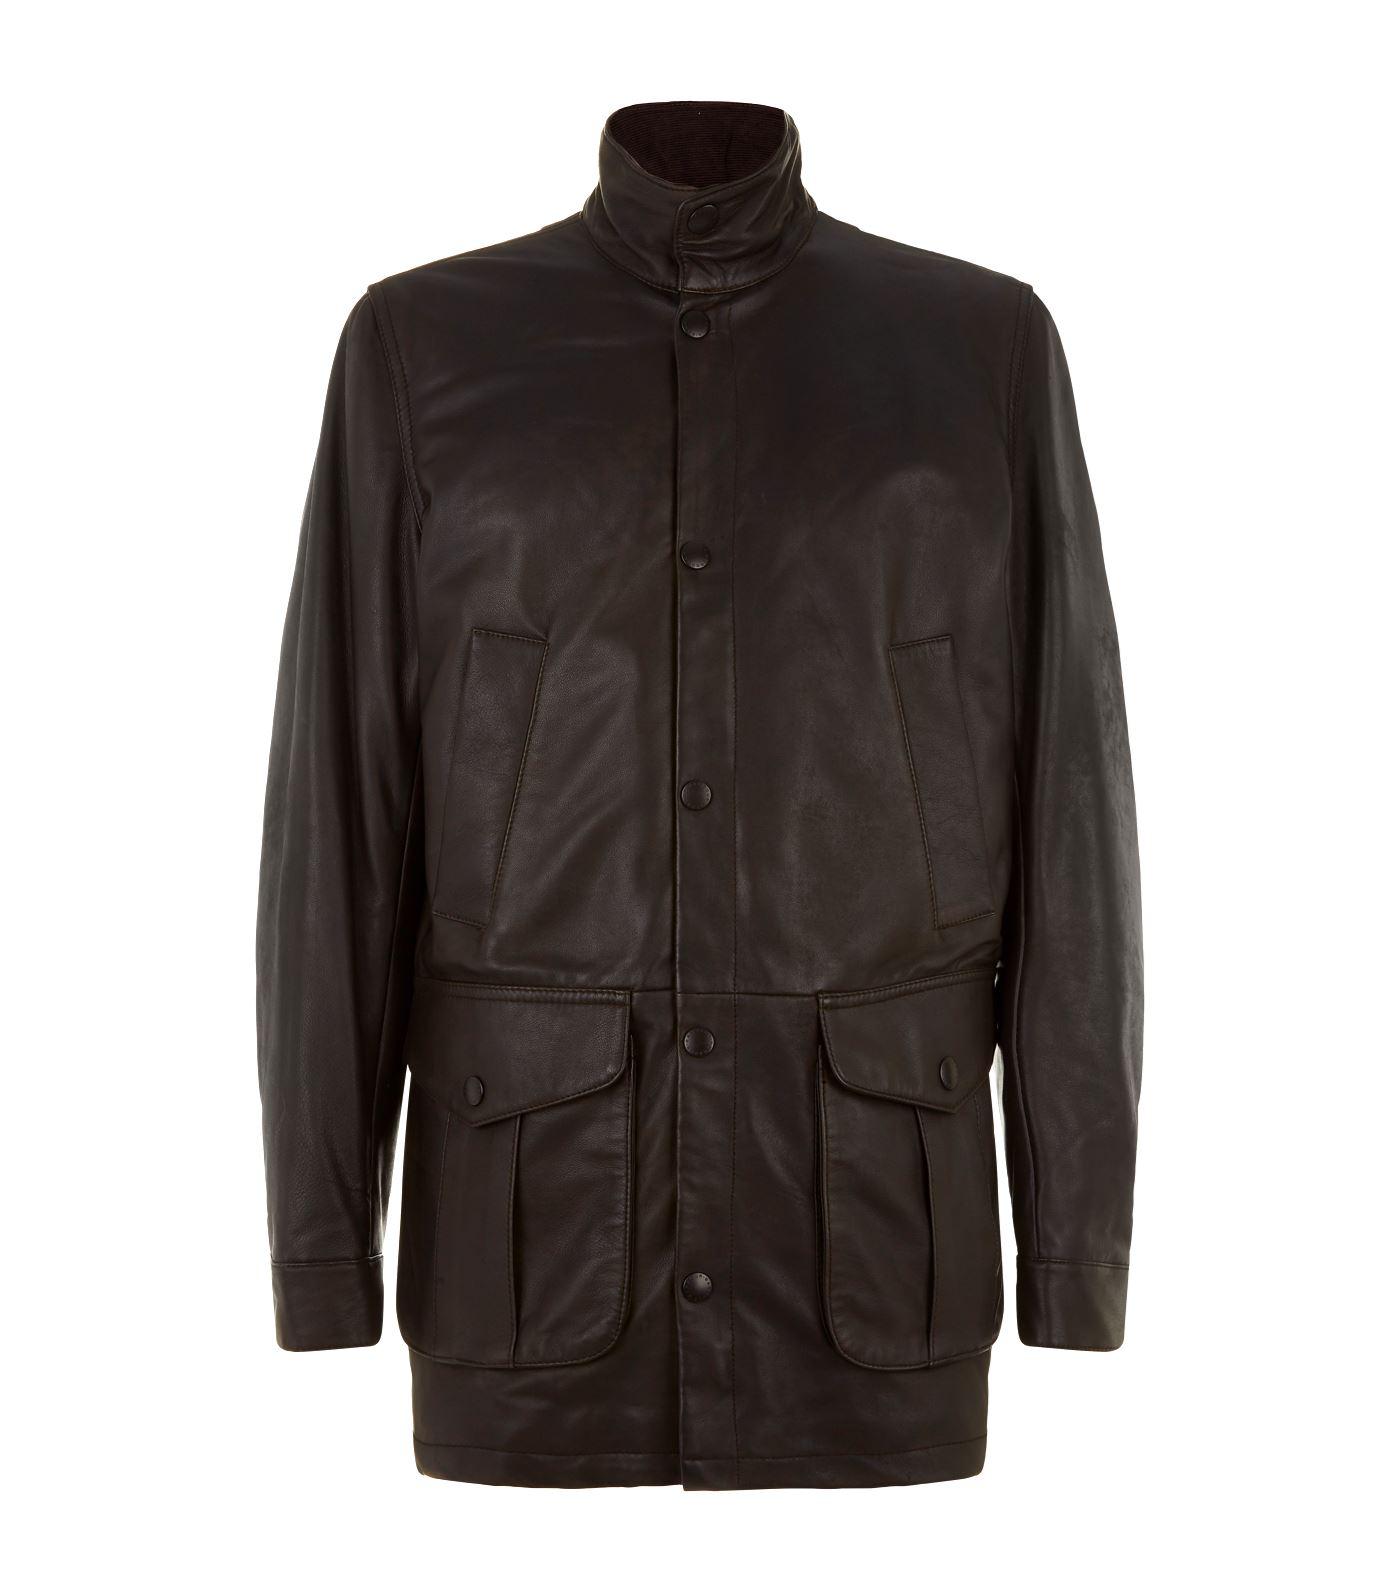 barbour thomas leather jacket